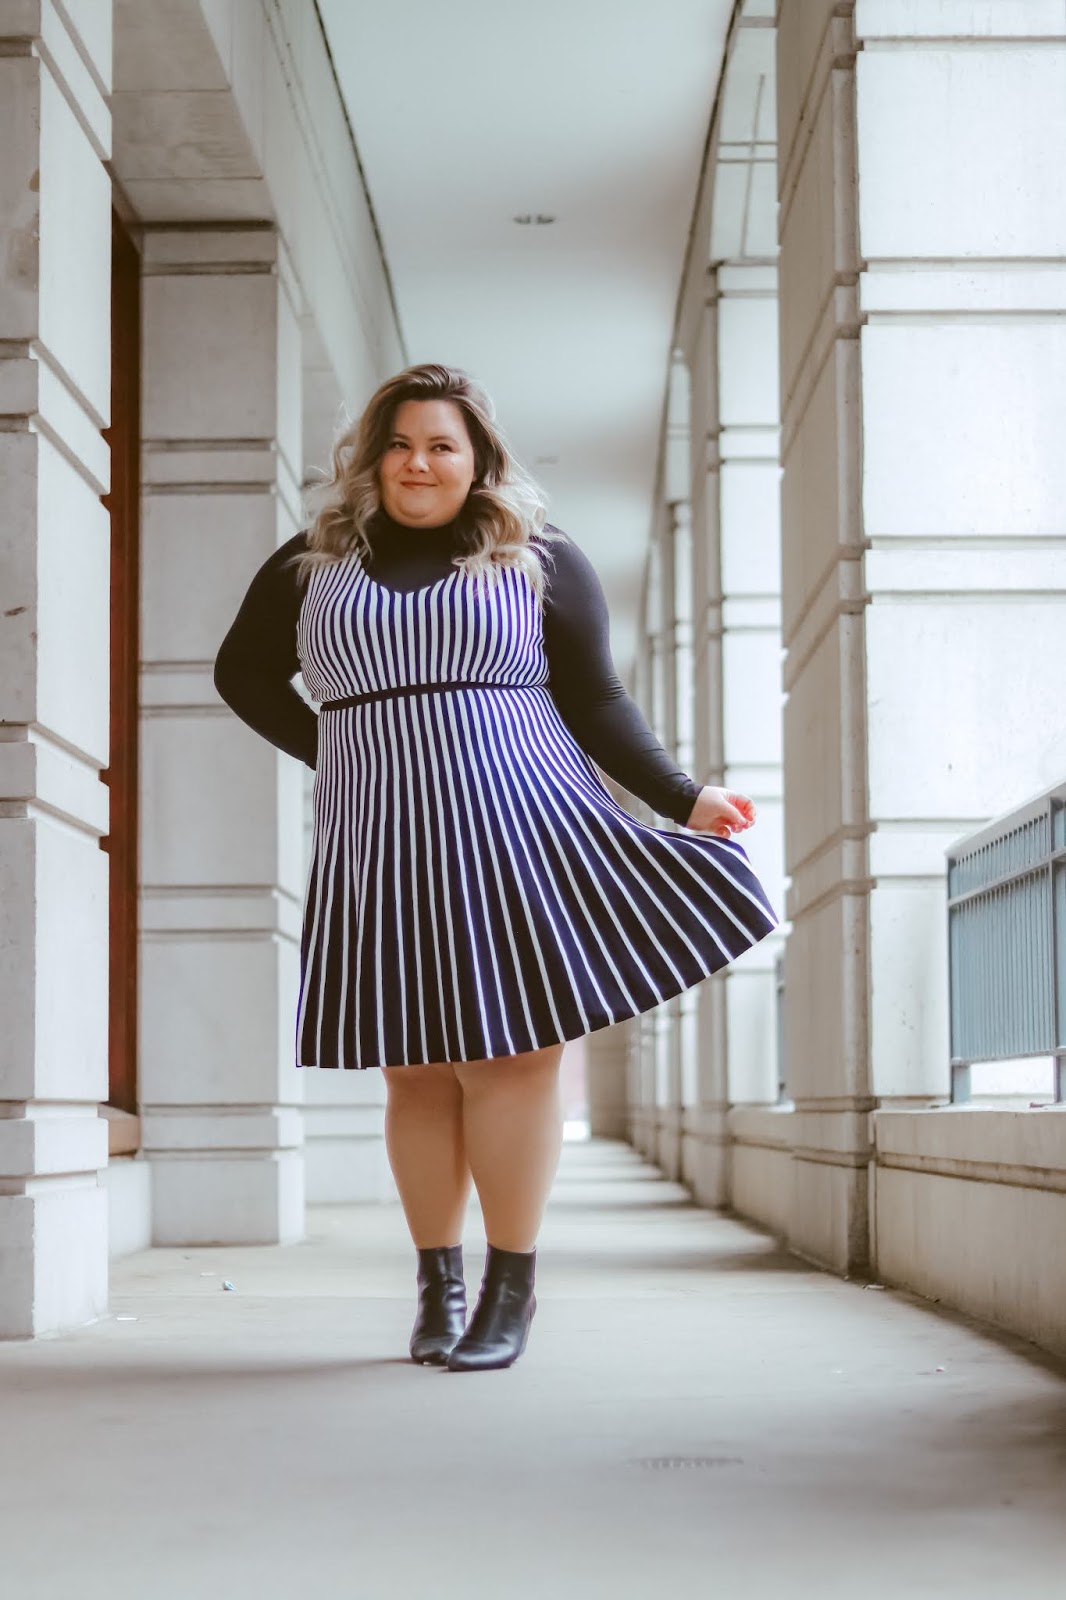 Chicago Plus Size Petite Fashion Blogger Natalie in the City styles Torrid's flattering Black & White Stripe Sweater-Knit Skater Dress.